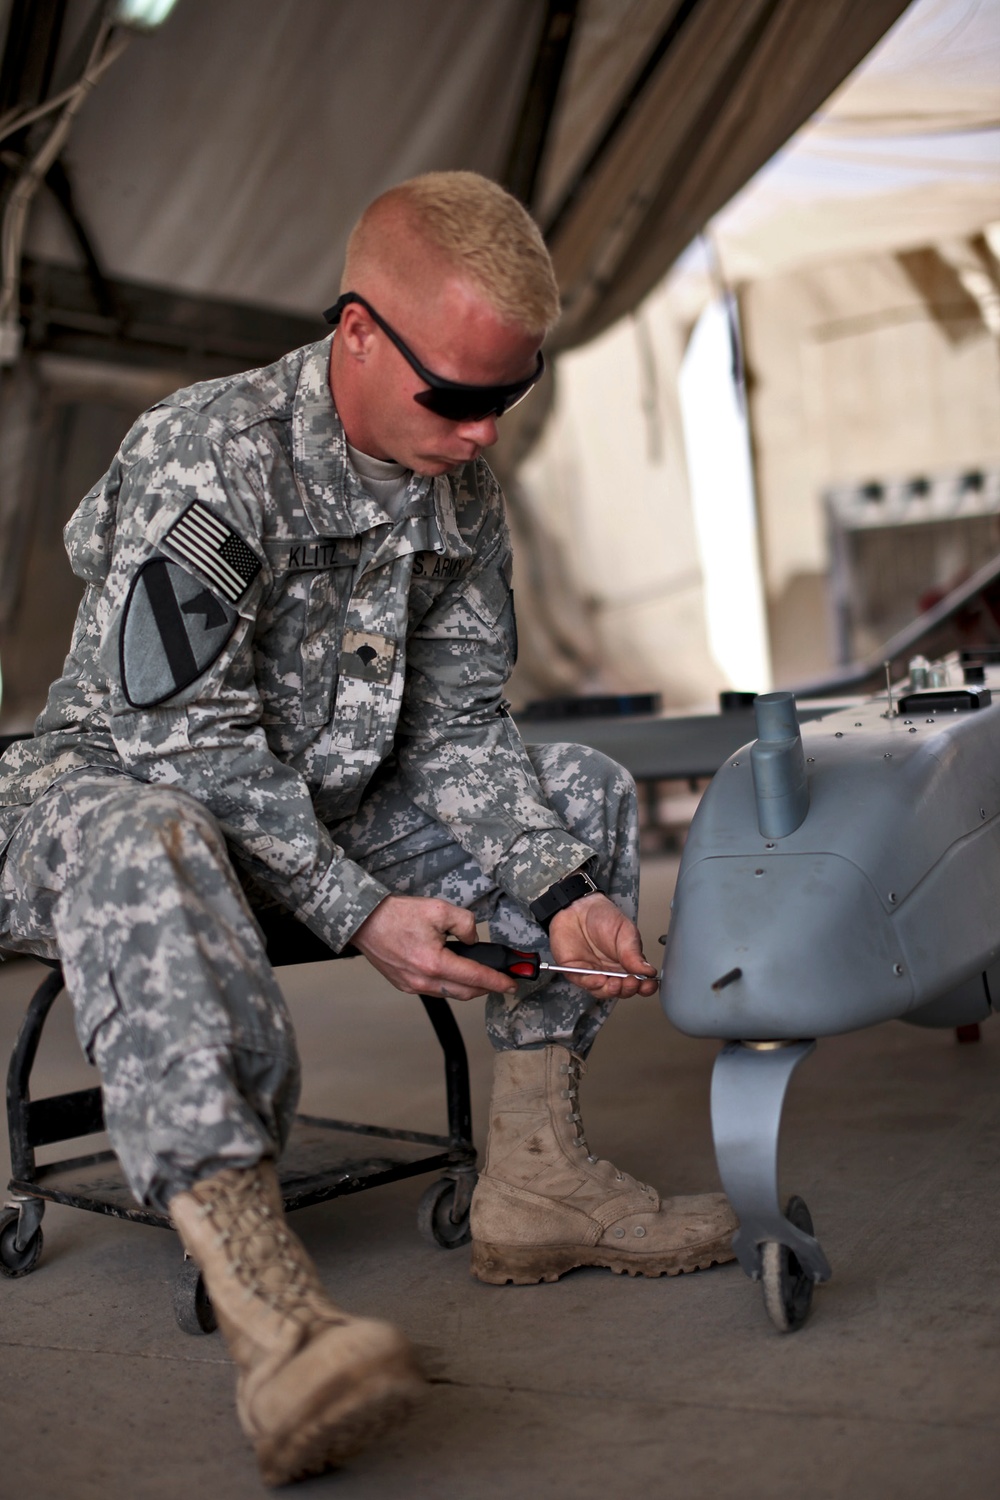 Air Cav UAV Hub Reaches 20,000 Flight Hours